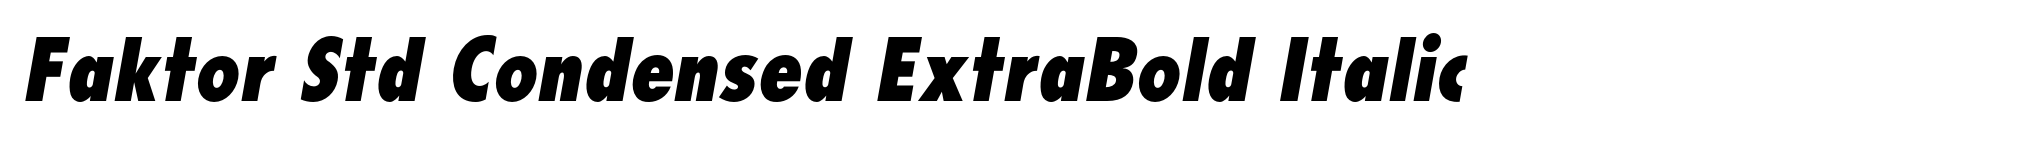 Faktor Std Condensed ExtraBold Italic image